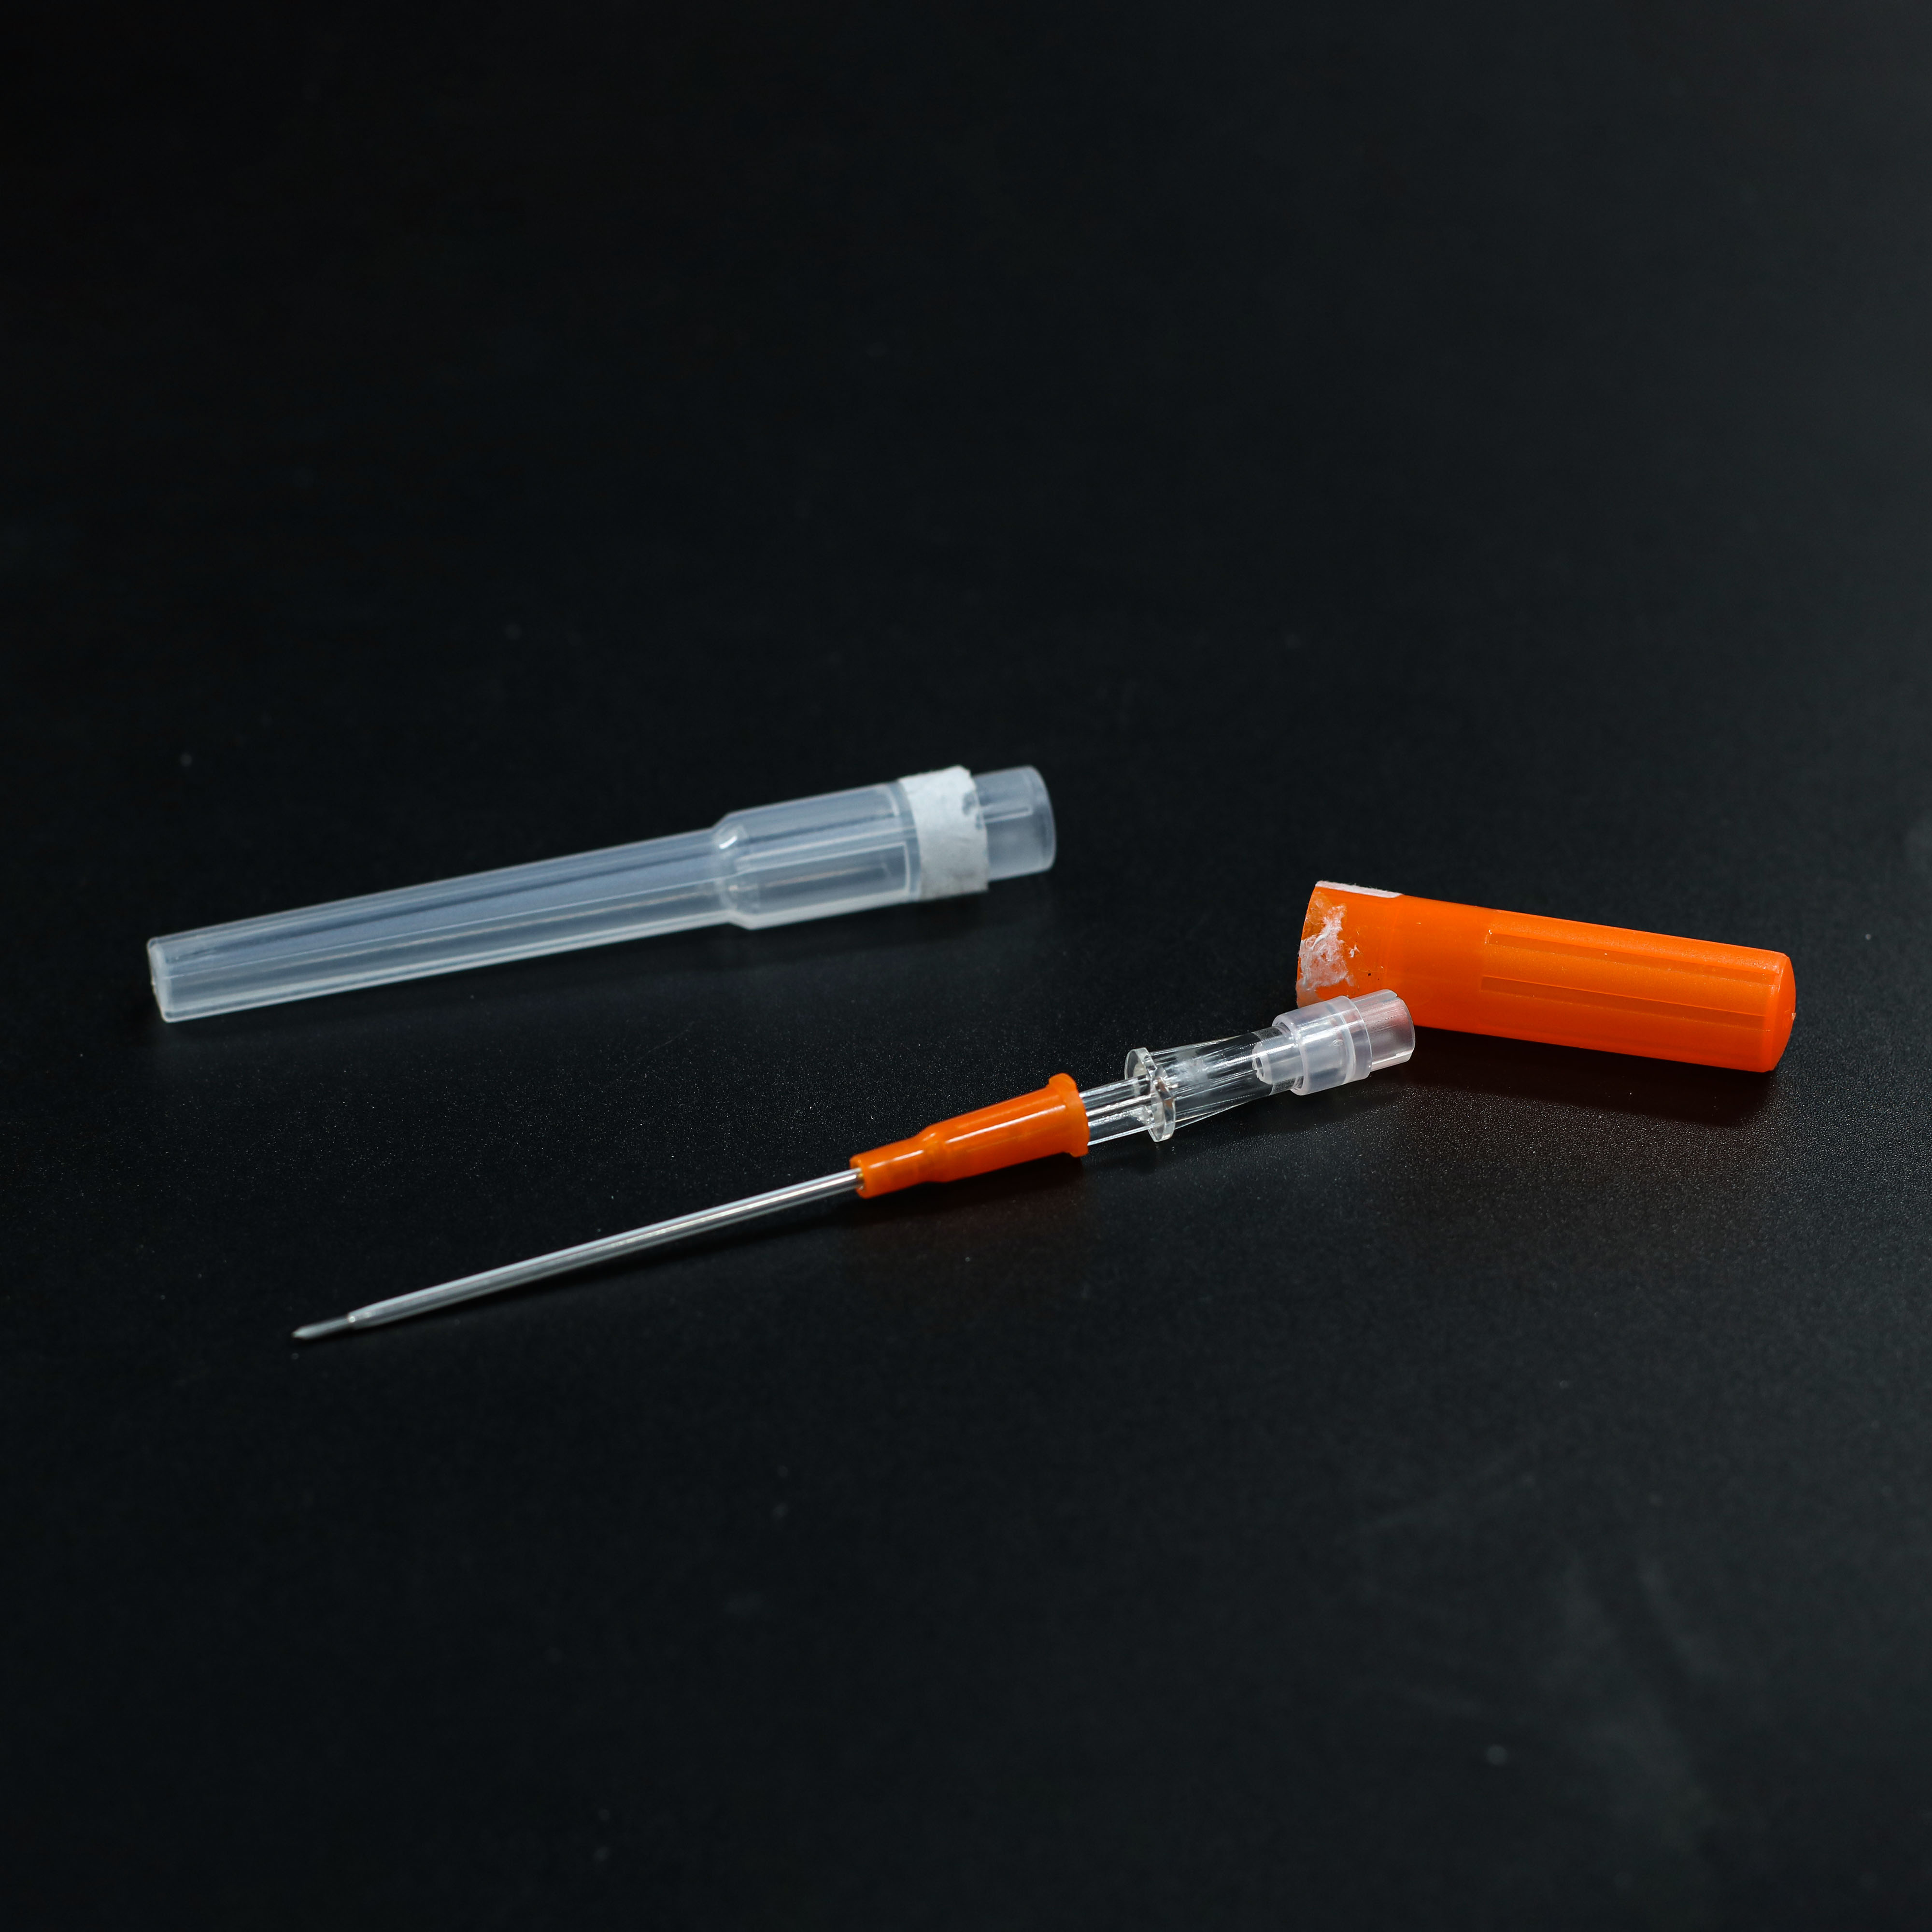 IV cannula ประเภท IV Medical Pen-type